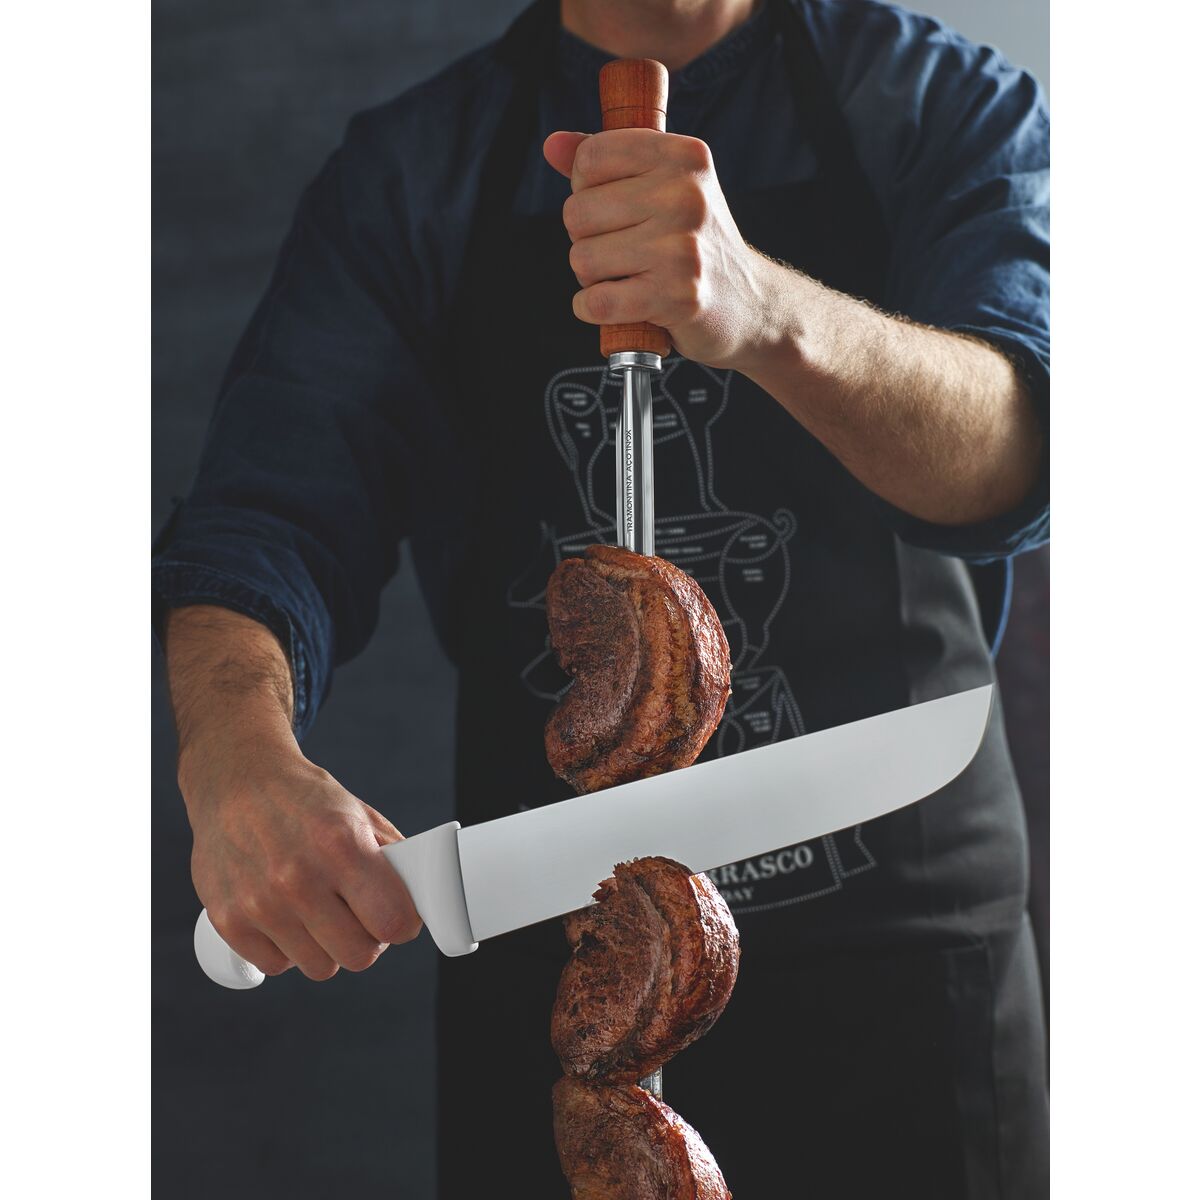 Cuchillo Carnicero Tramontina 12 Pulgadas Profesional - Promart